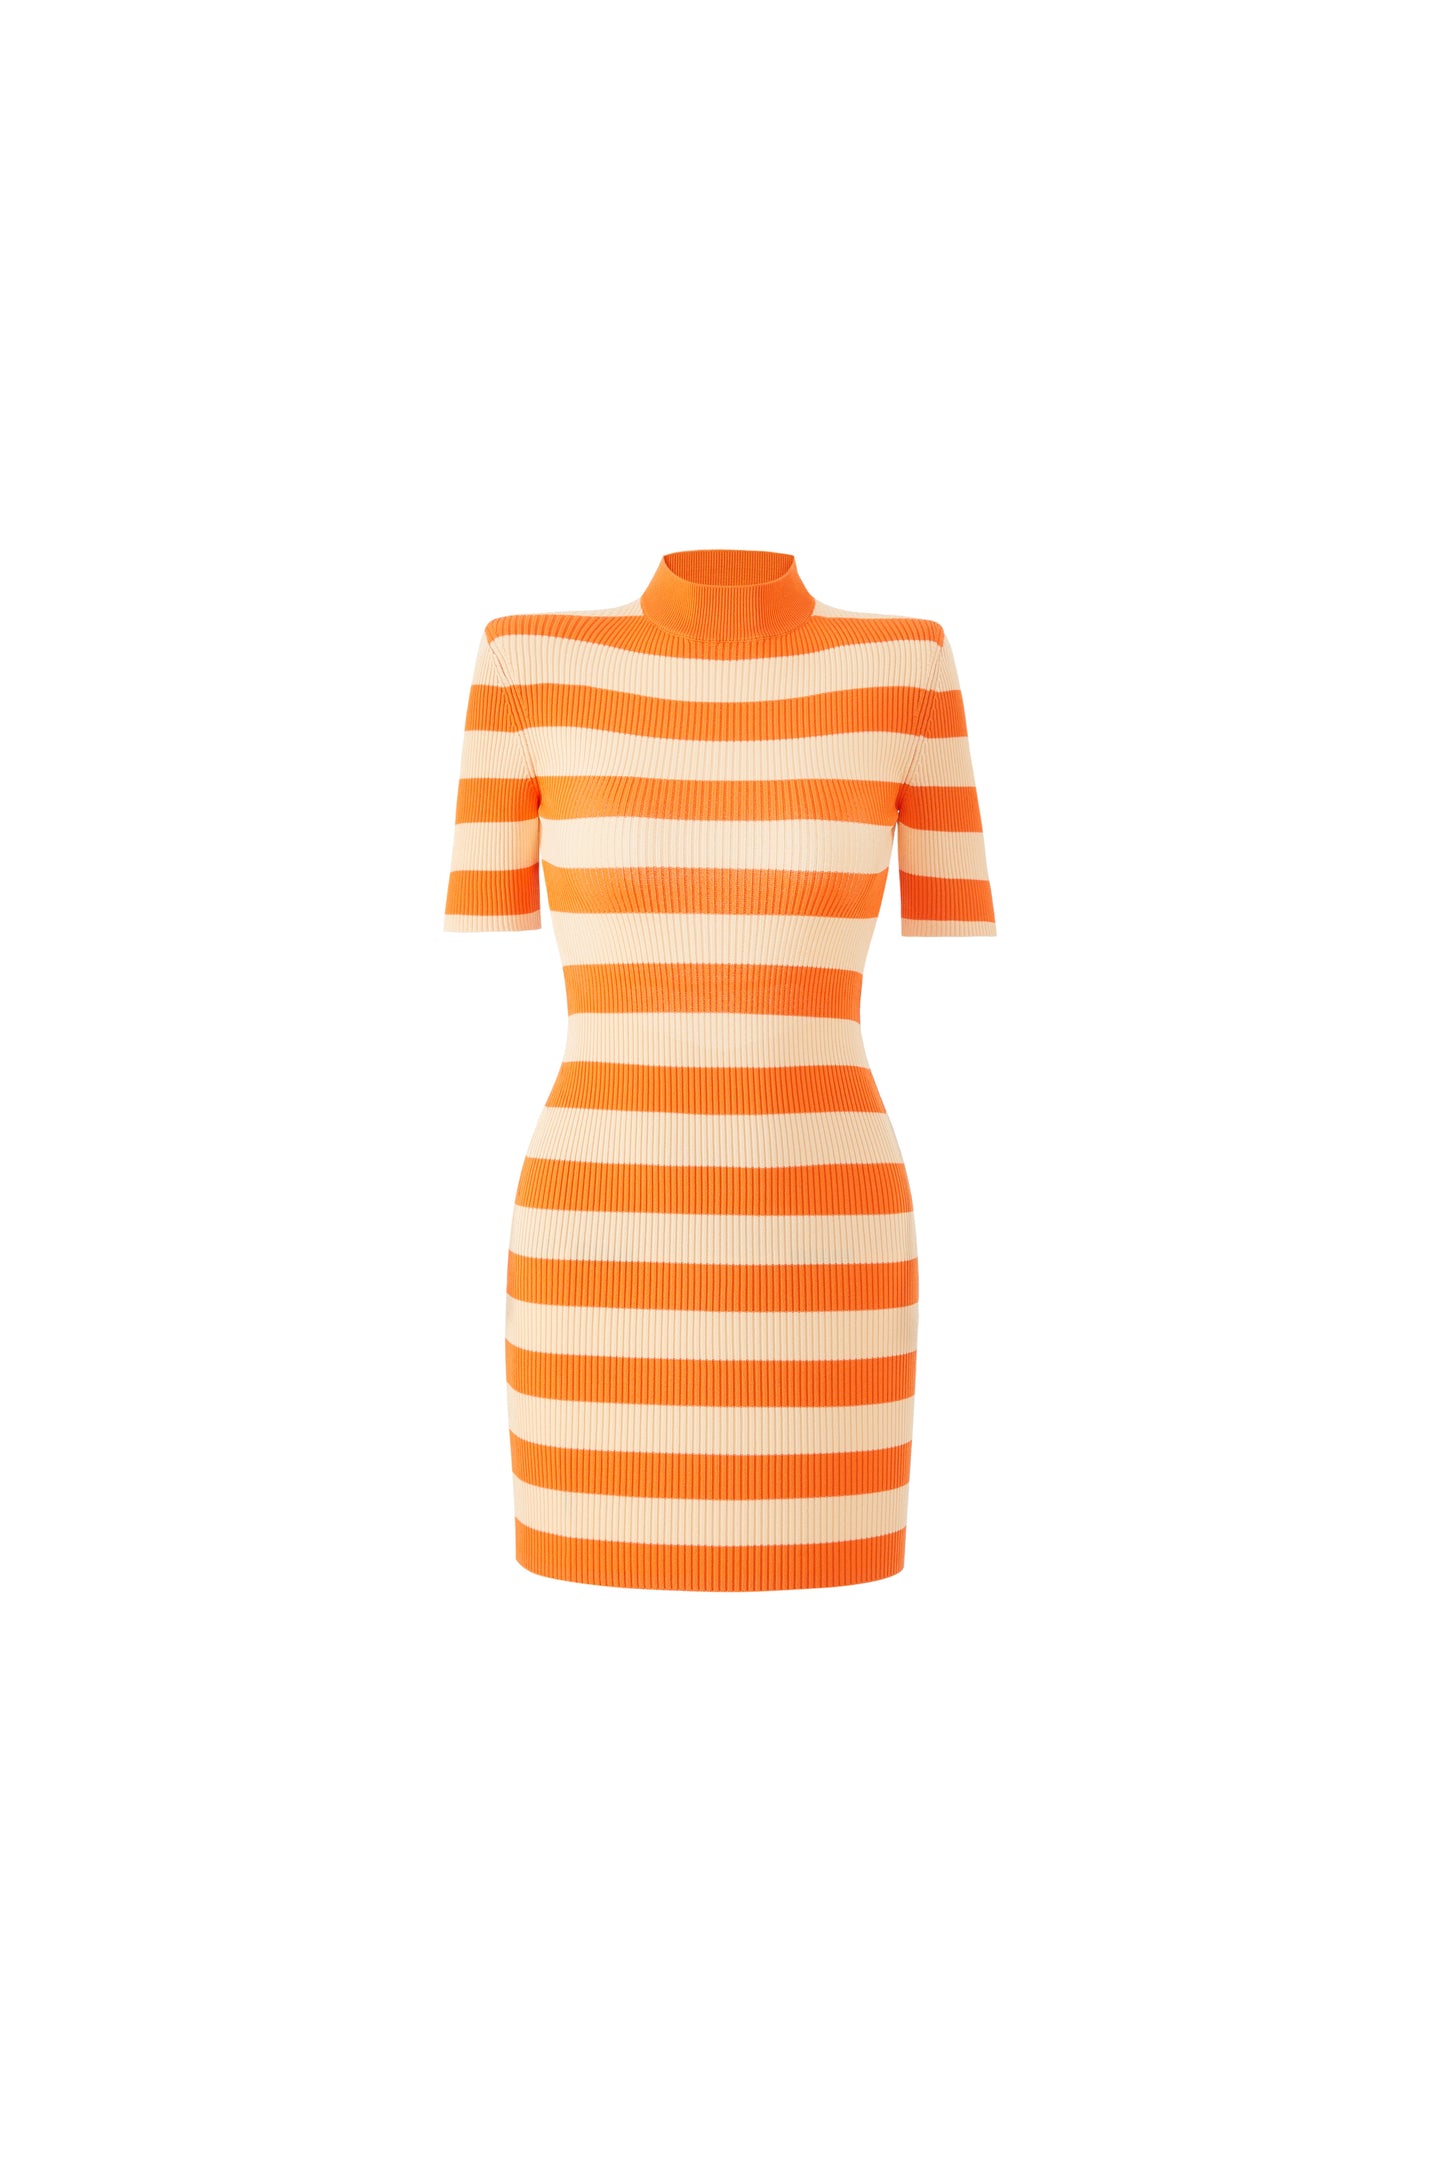 Madeline Knit Open Back Dress (Orange) (Final Sale)